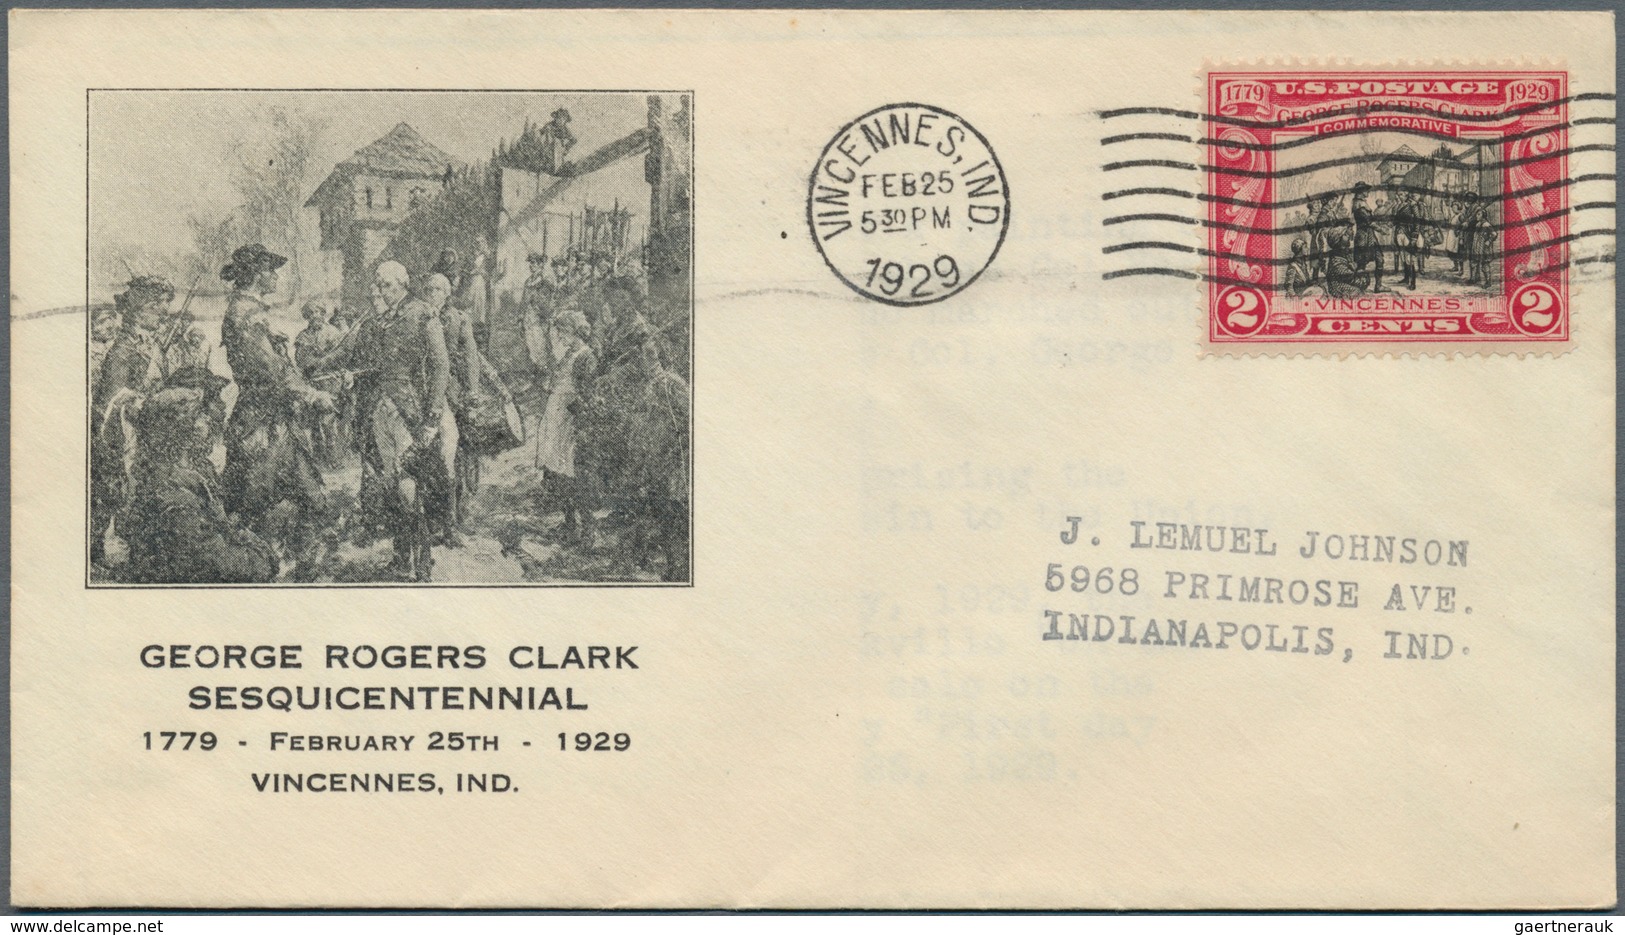 Vereinigte Staaten von Amerika: 1929/1945 (focus on 1930s), Lot of 107 FDC often bearing stamps in u